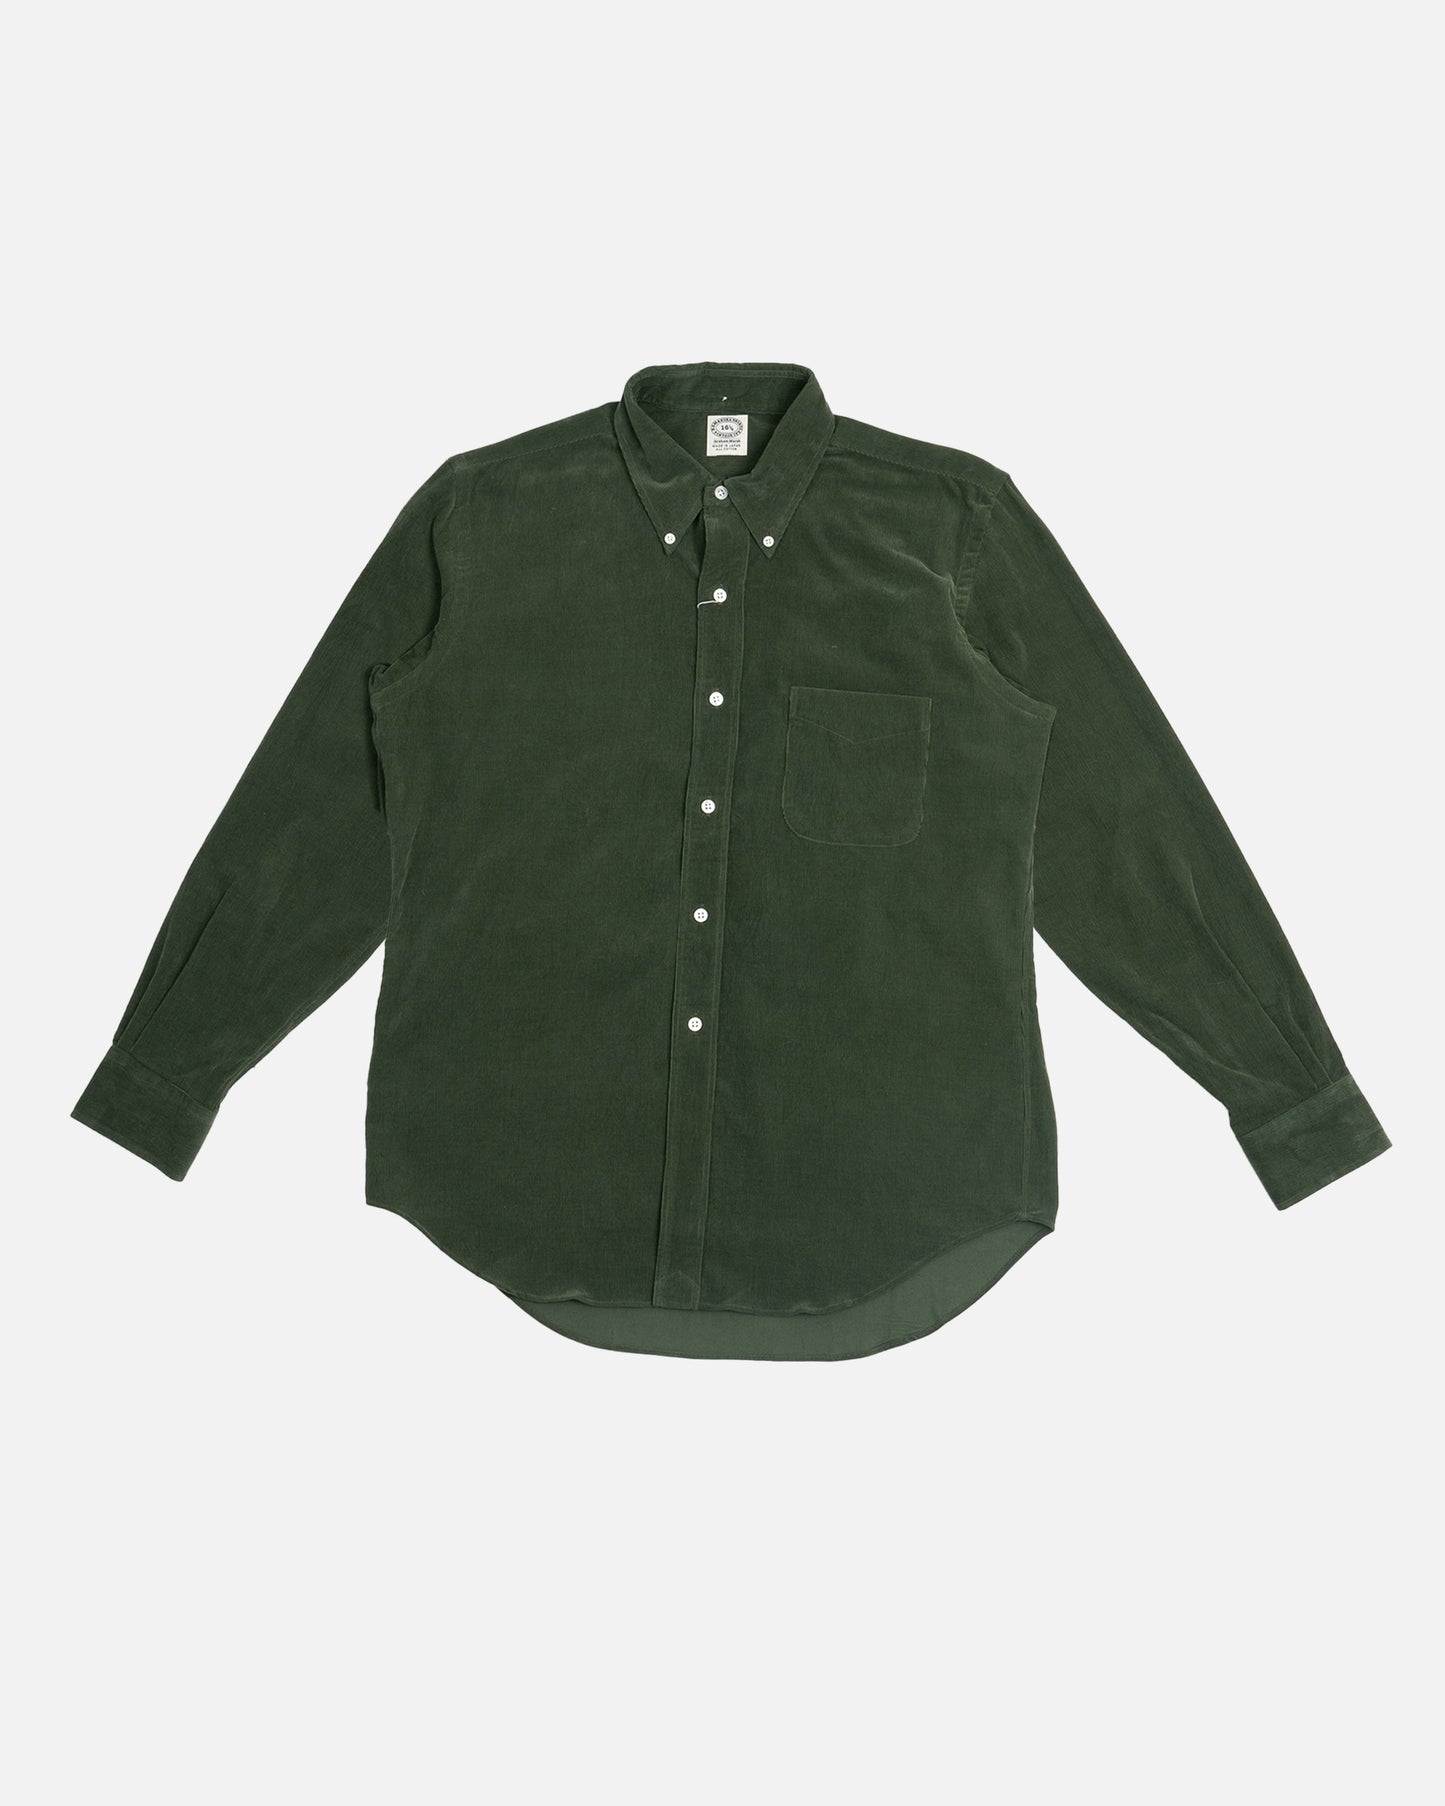 Kamakura Vintage Ivy Olive Corduroy Button Down Shirt